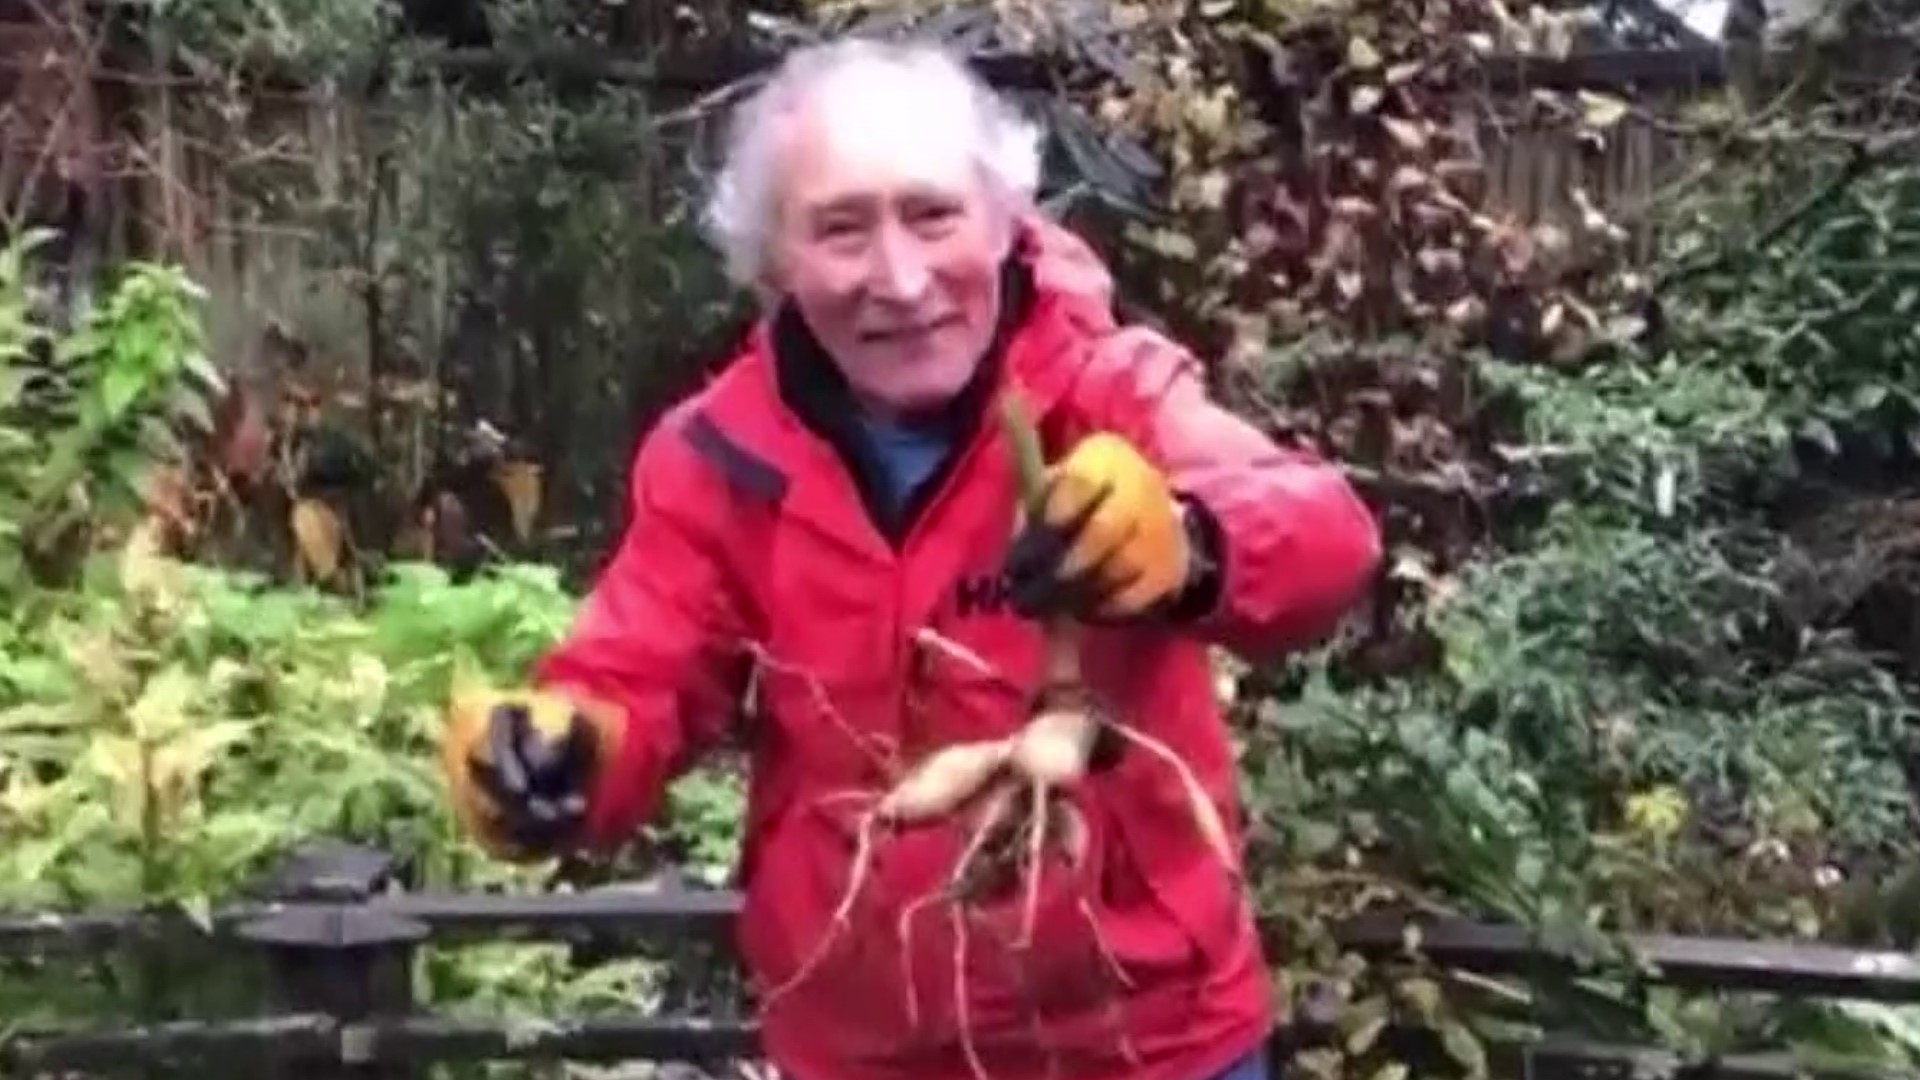 Gardening expert Ciscoe Morris gives us advice! #newdaynw